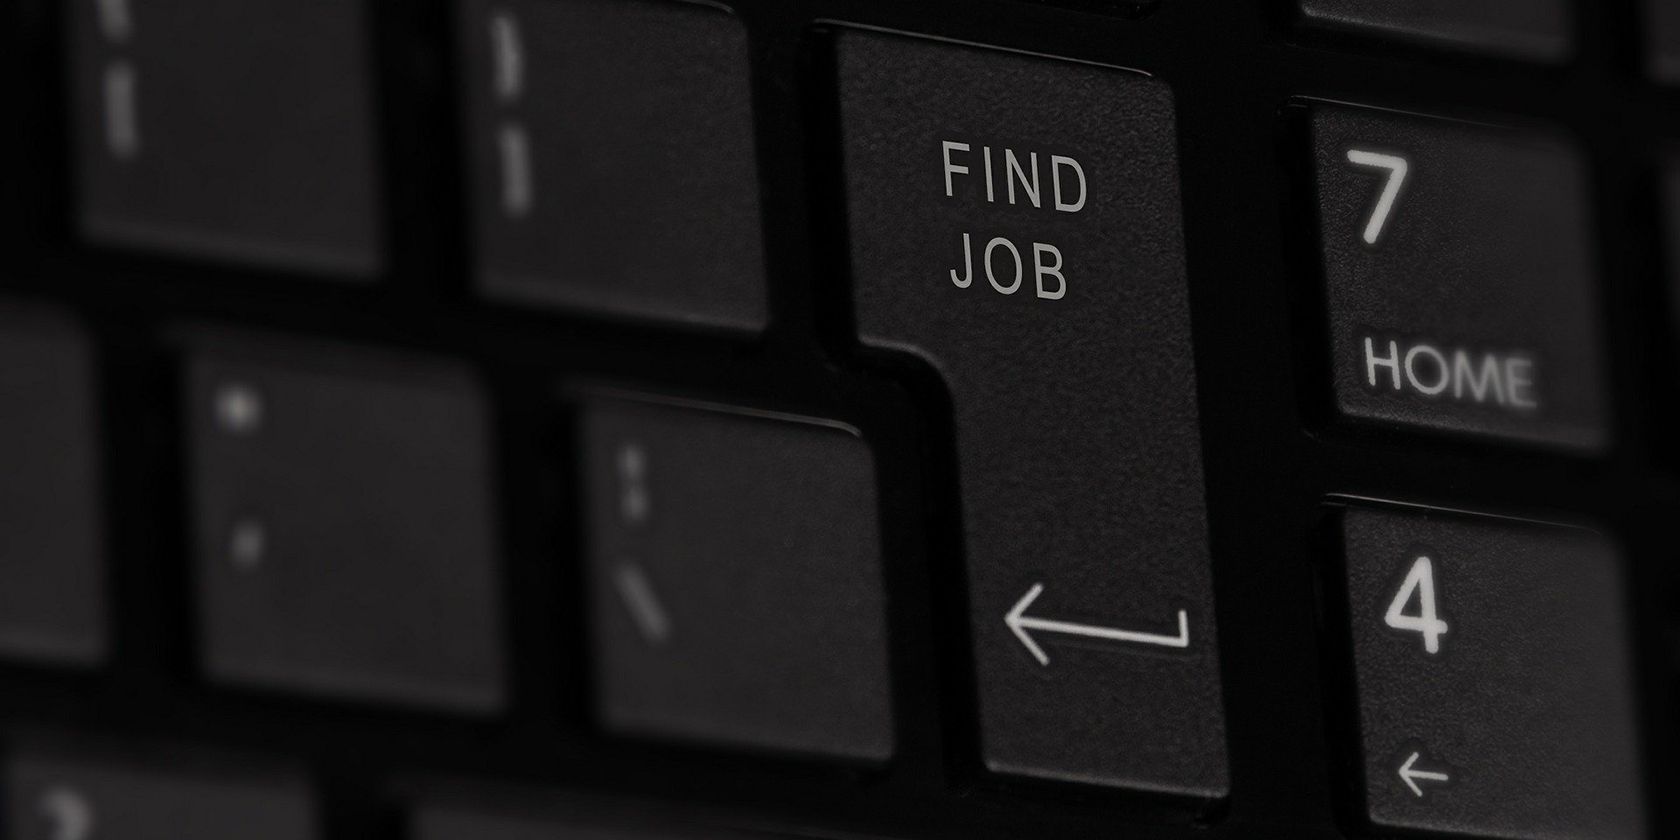 Find Job Key on the Keyboard